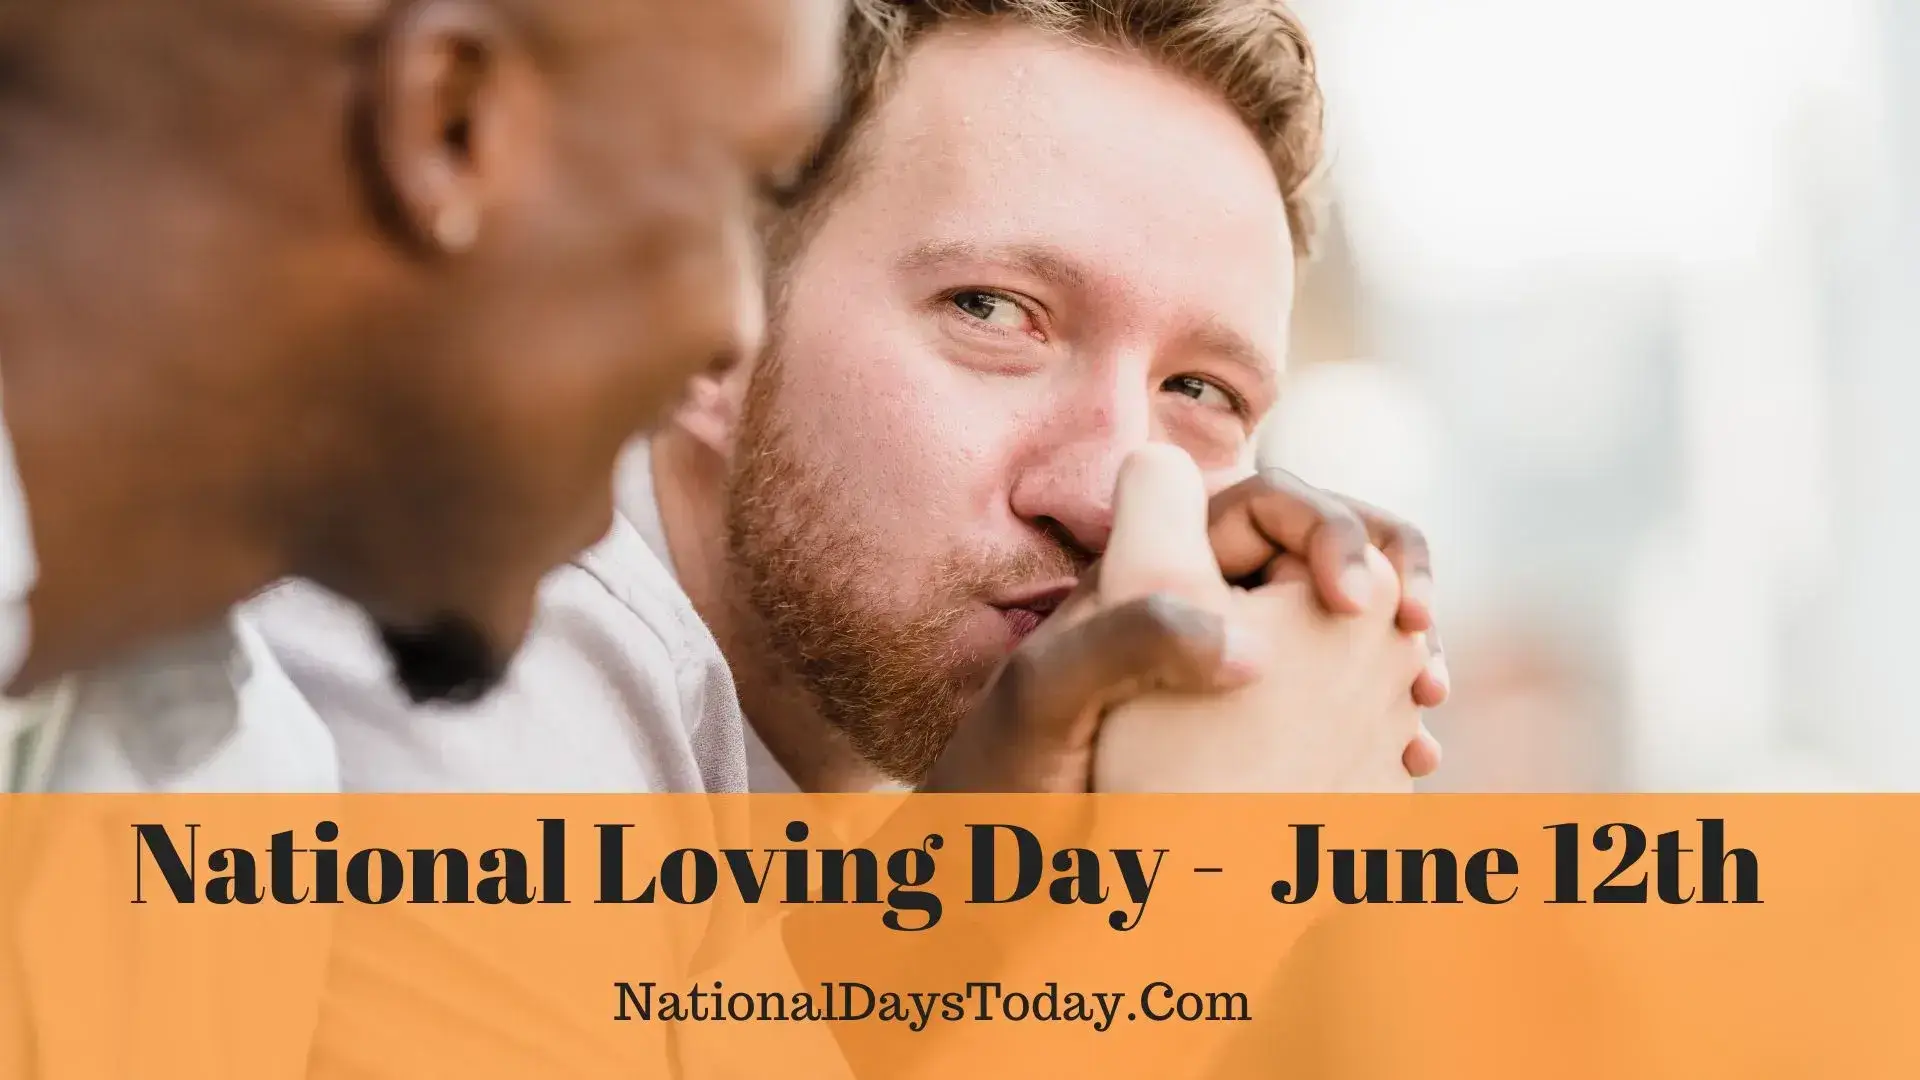 National Loving Day